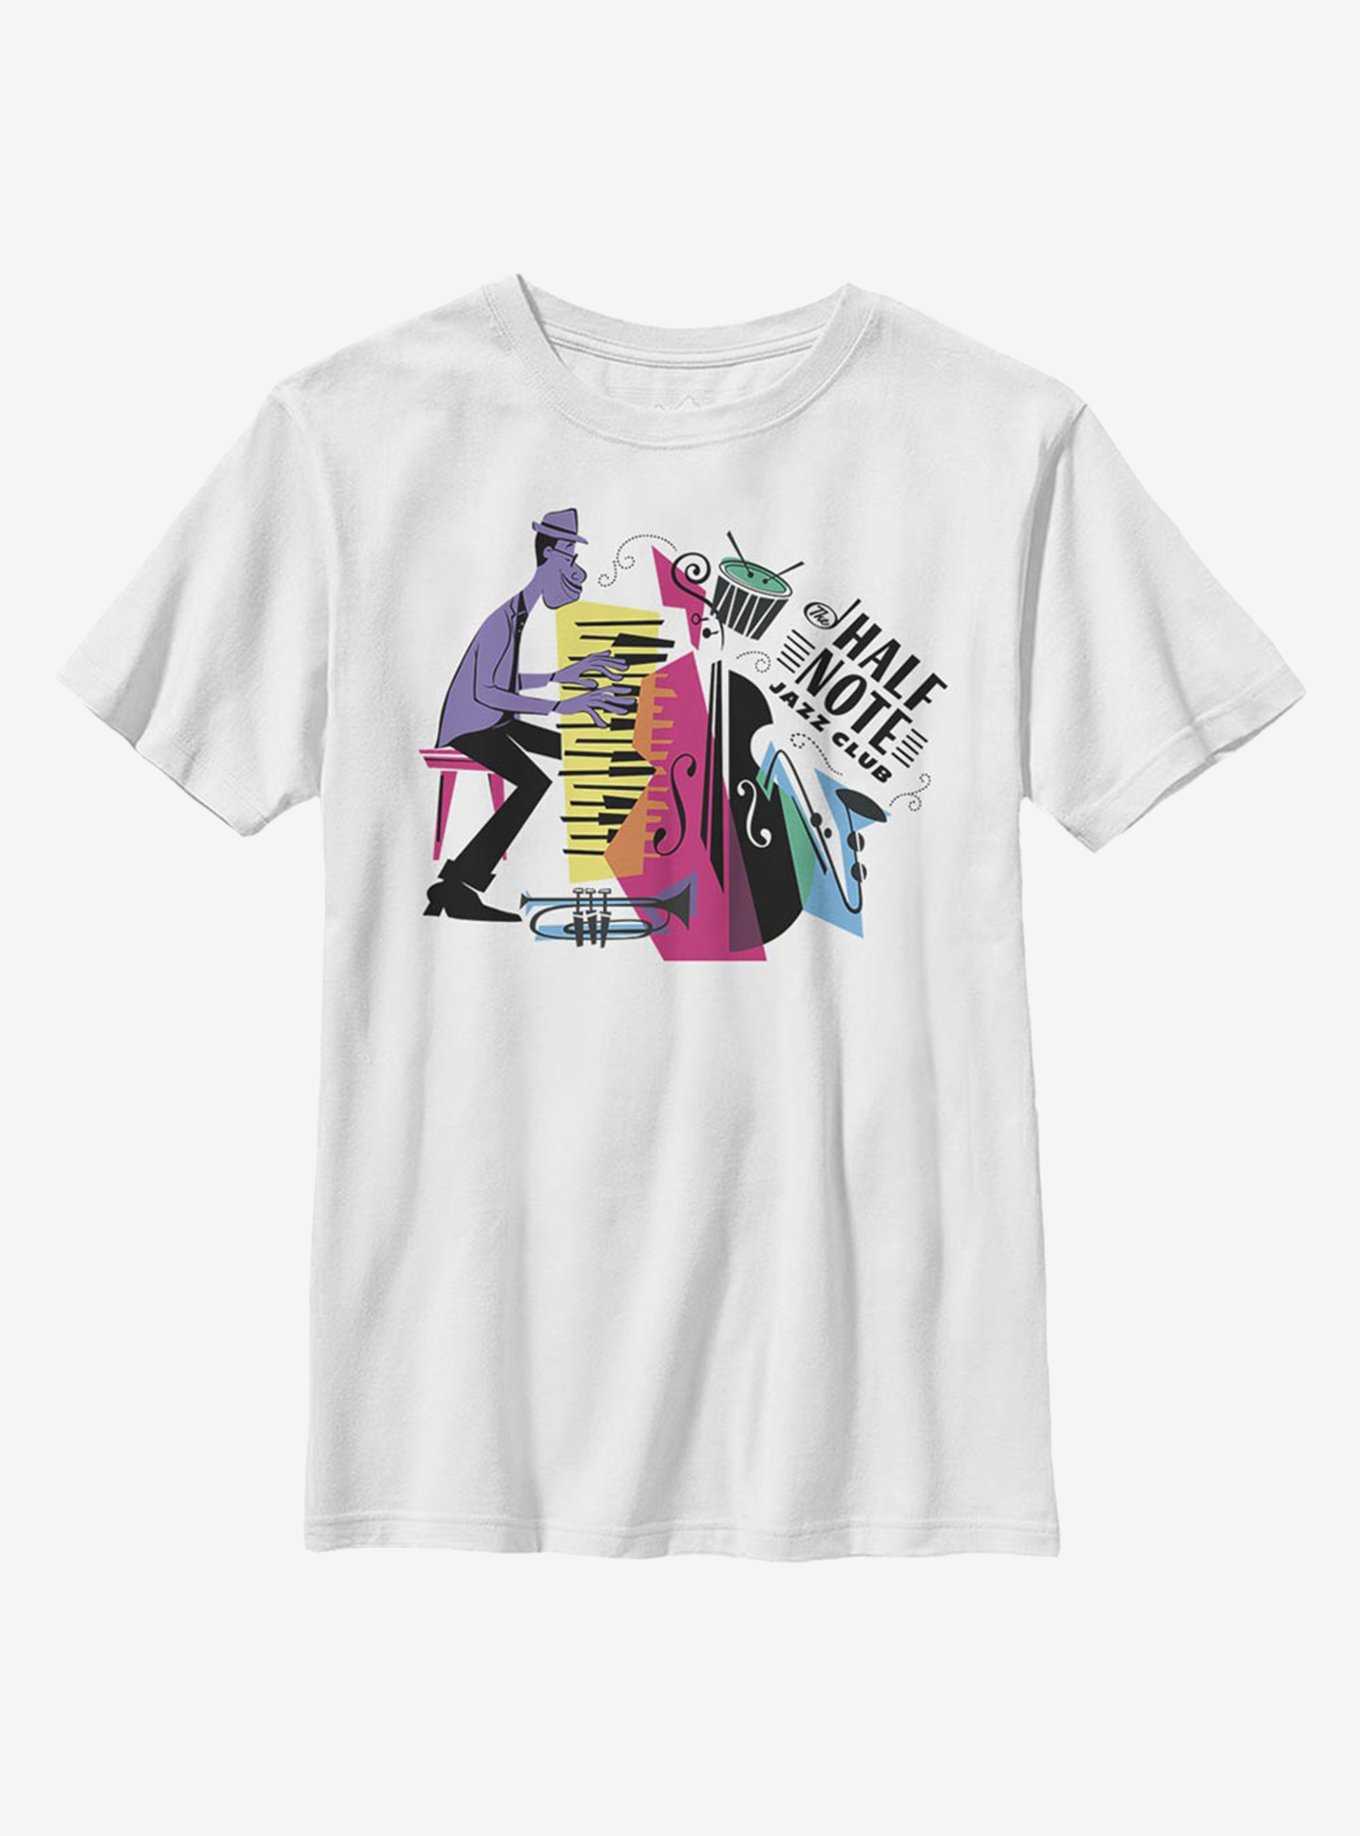 Disney Pixar Soul Half Note Jazz Club Badge Youth T-Shirt, , hi-res